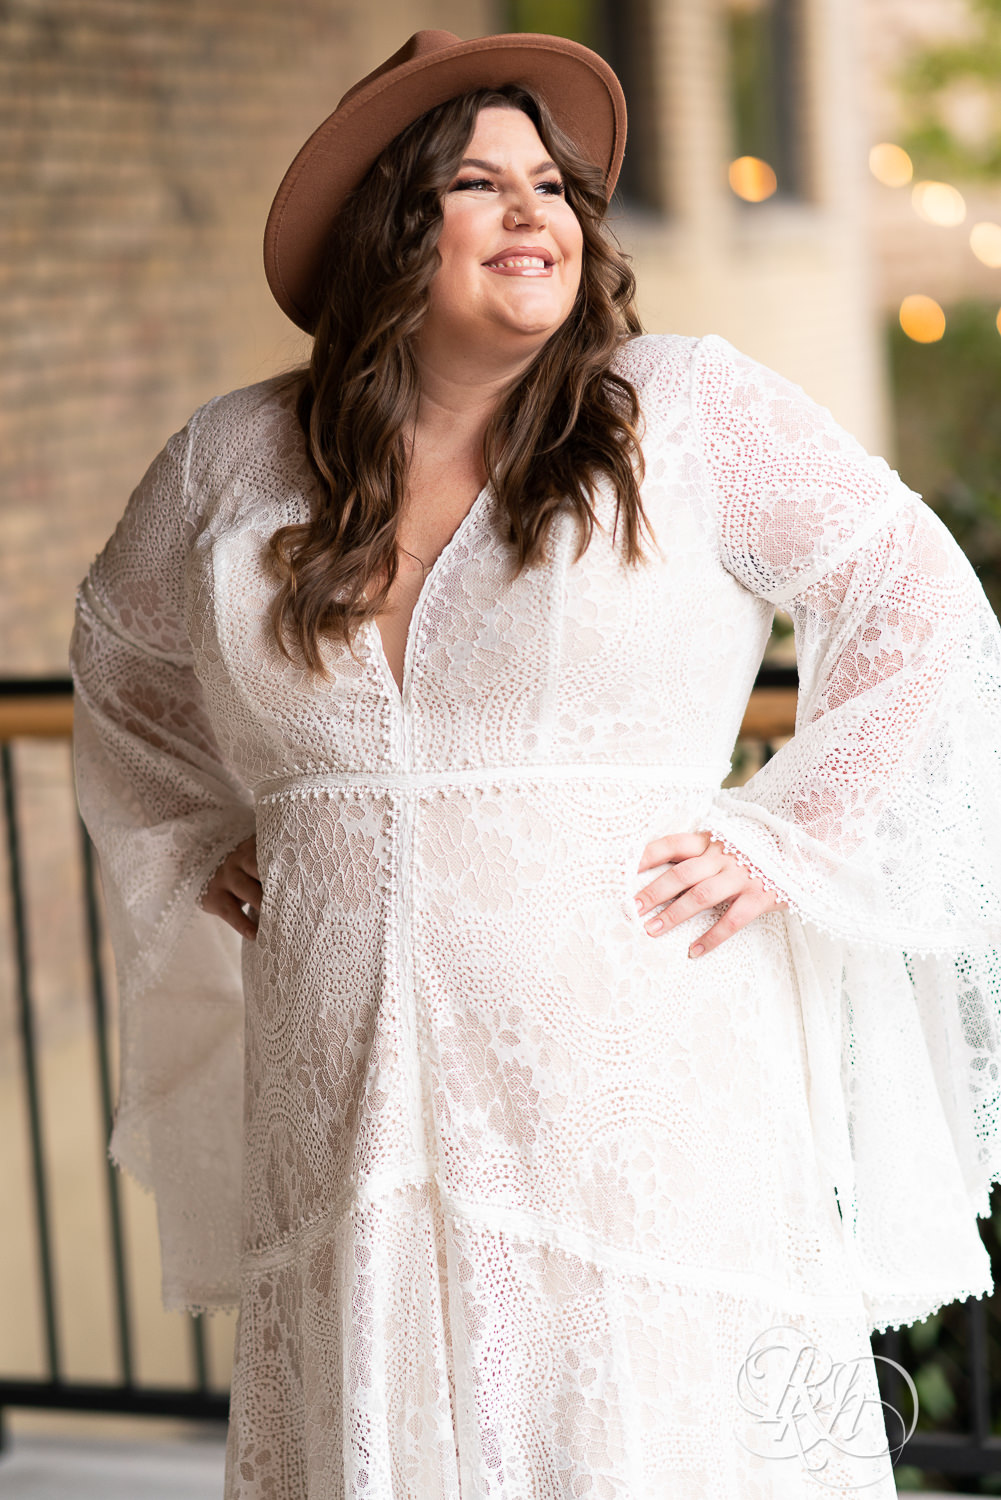 Plus size bride smiling in wedding dresses in Minneapolis, Minnesota.